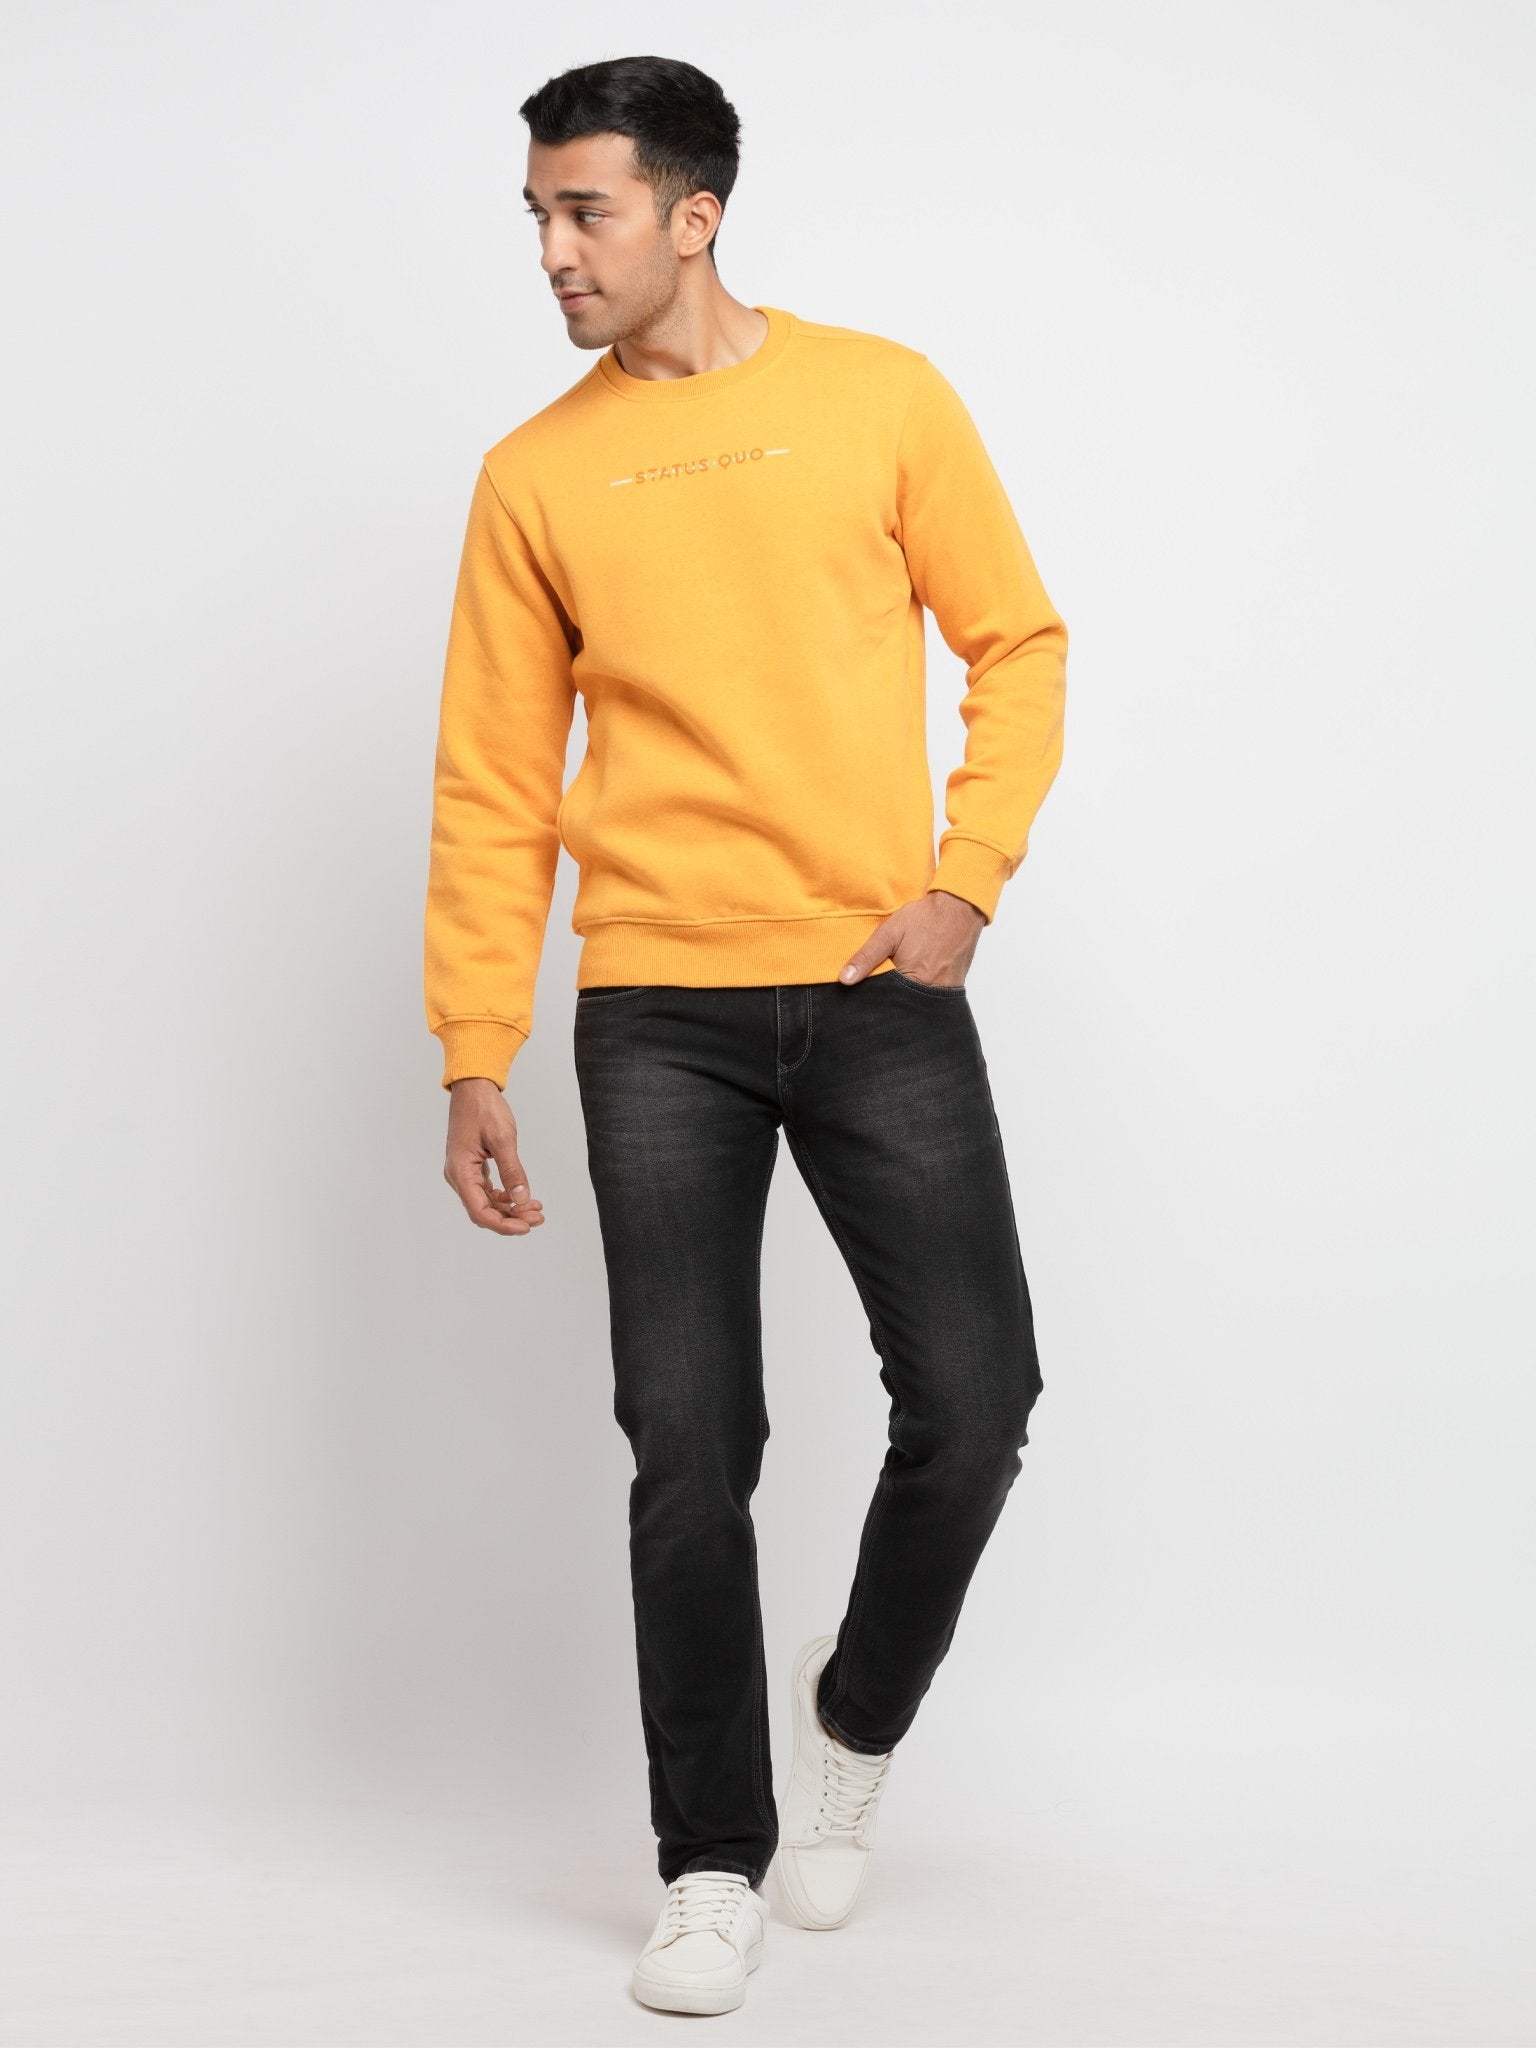 Status Quo | Men's Yellow Polycotton Printed Sweatshirts 7